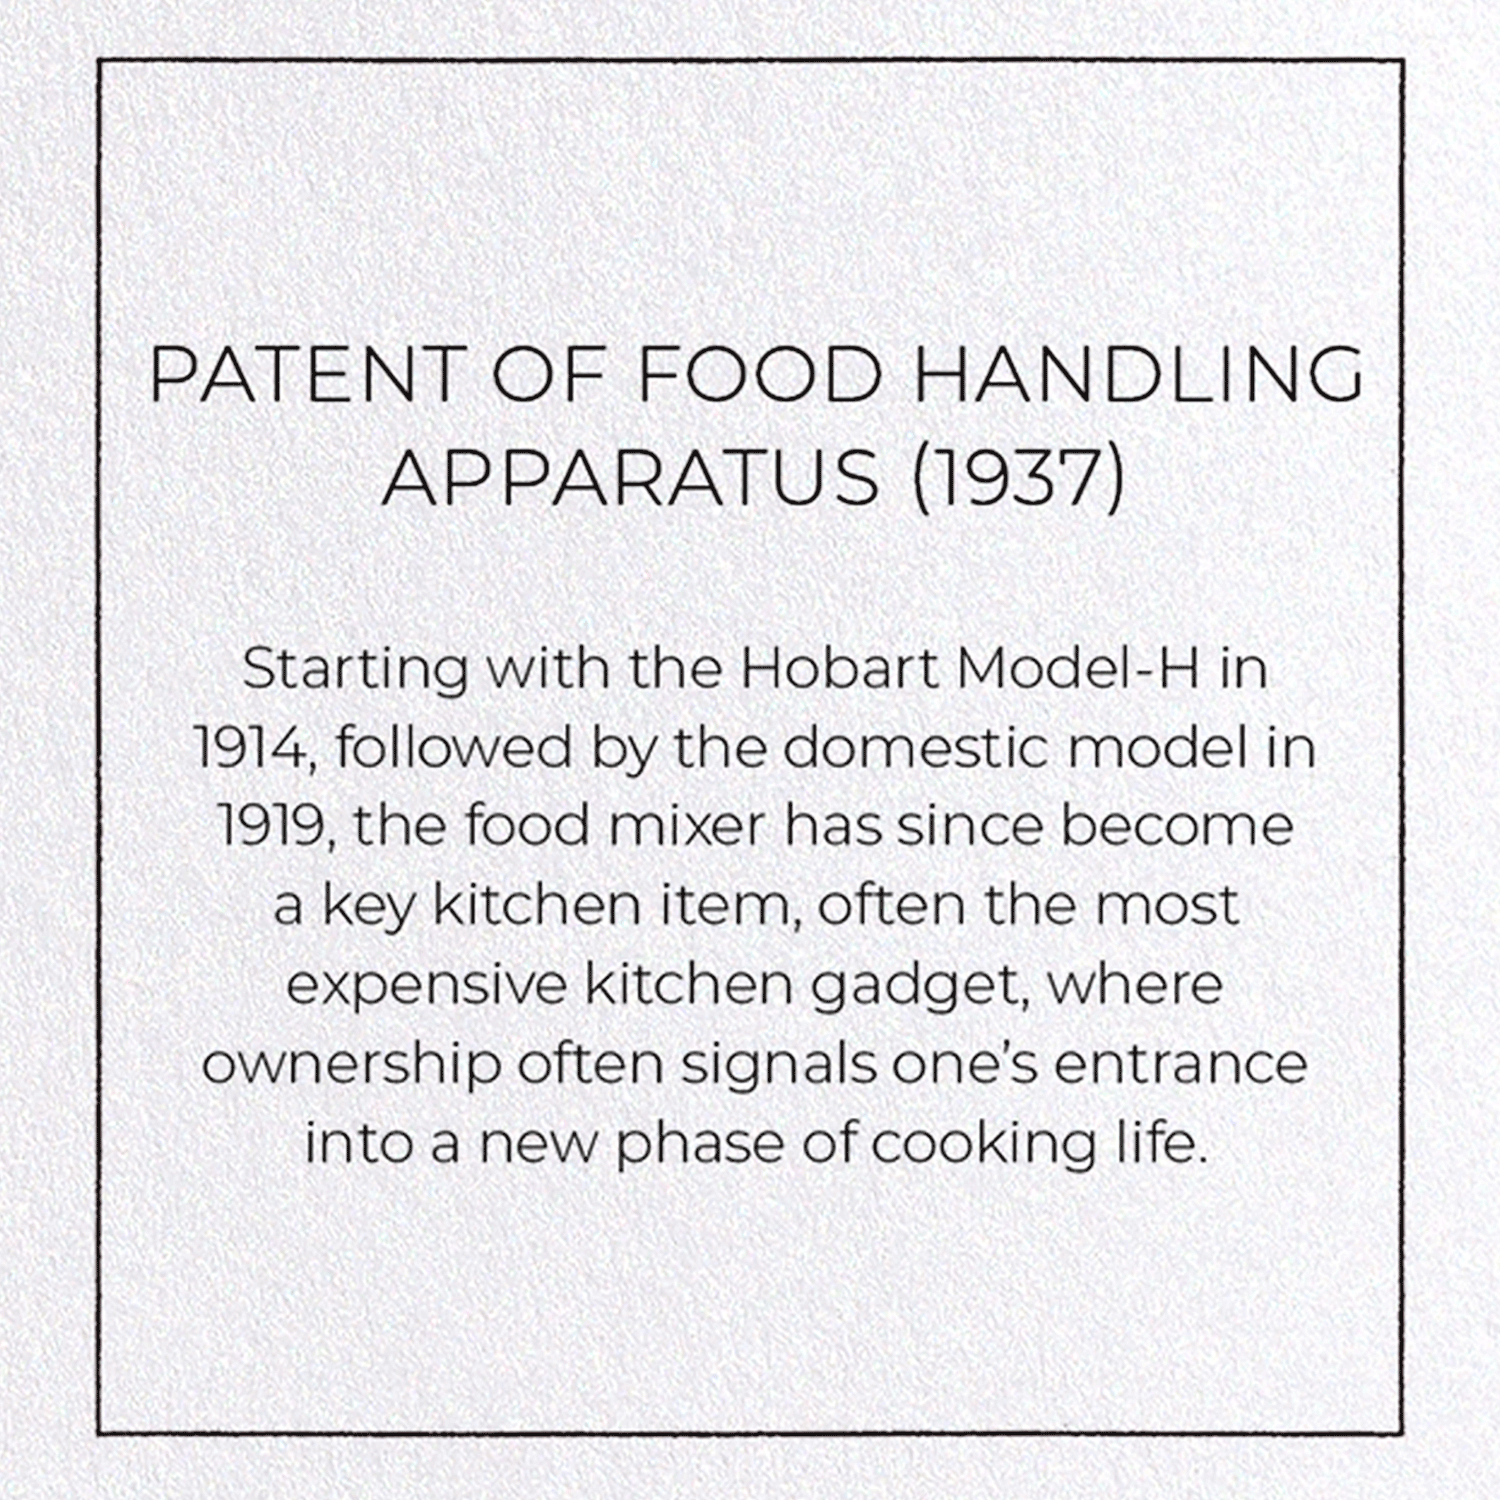 PATENT OF FOOD HANDLING APPARATUS (1937)